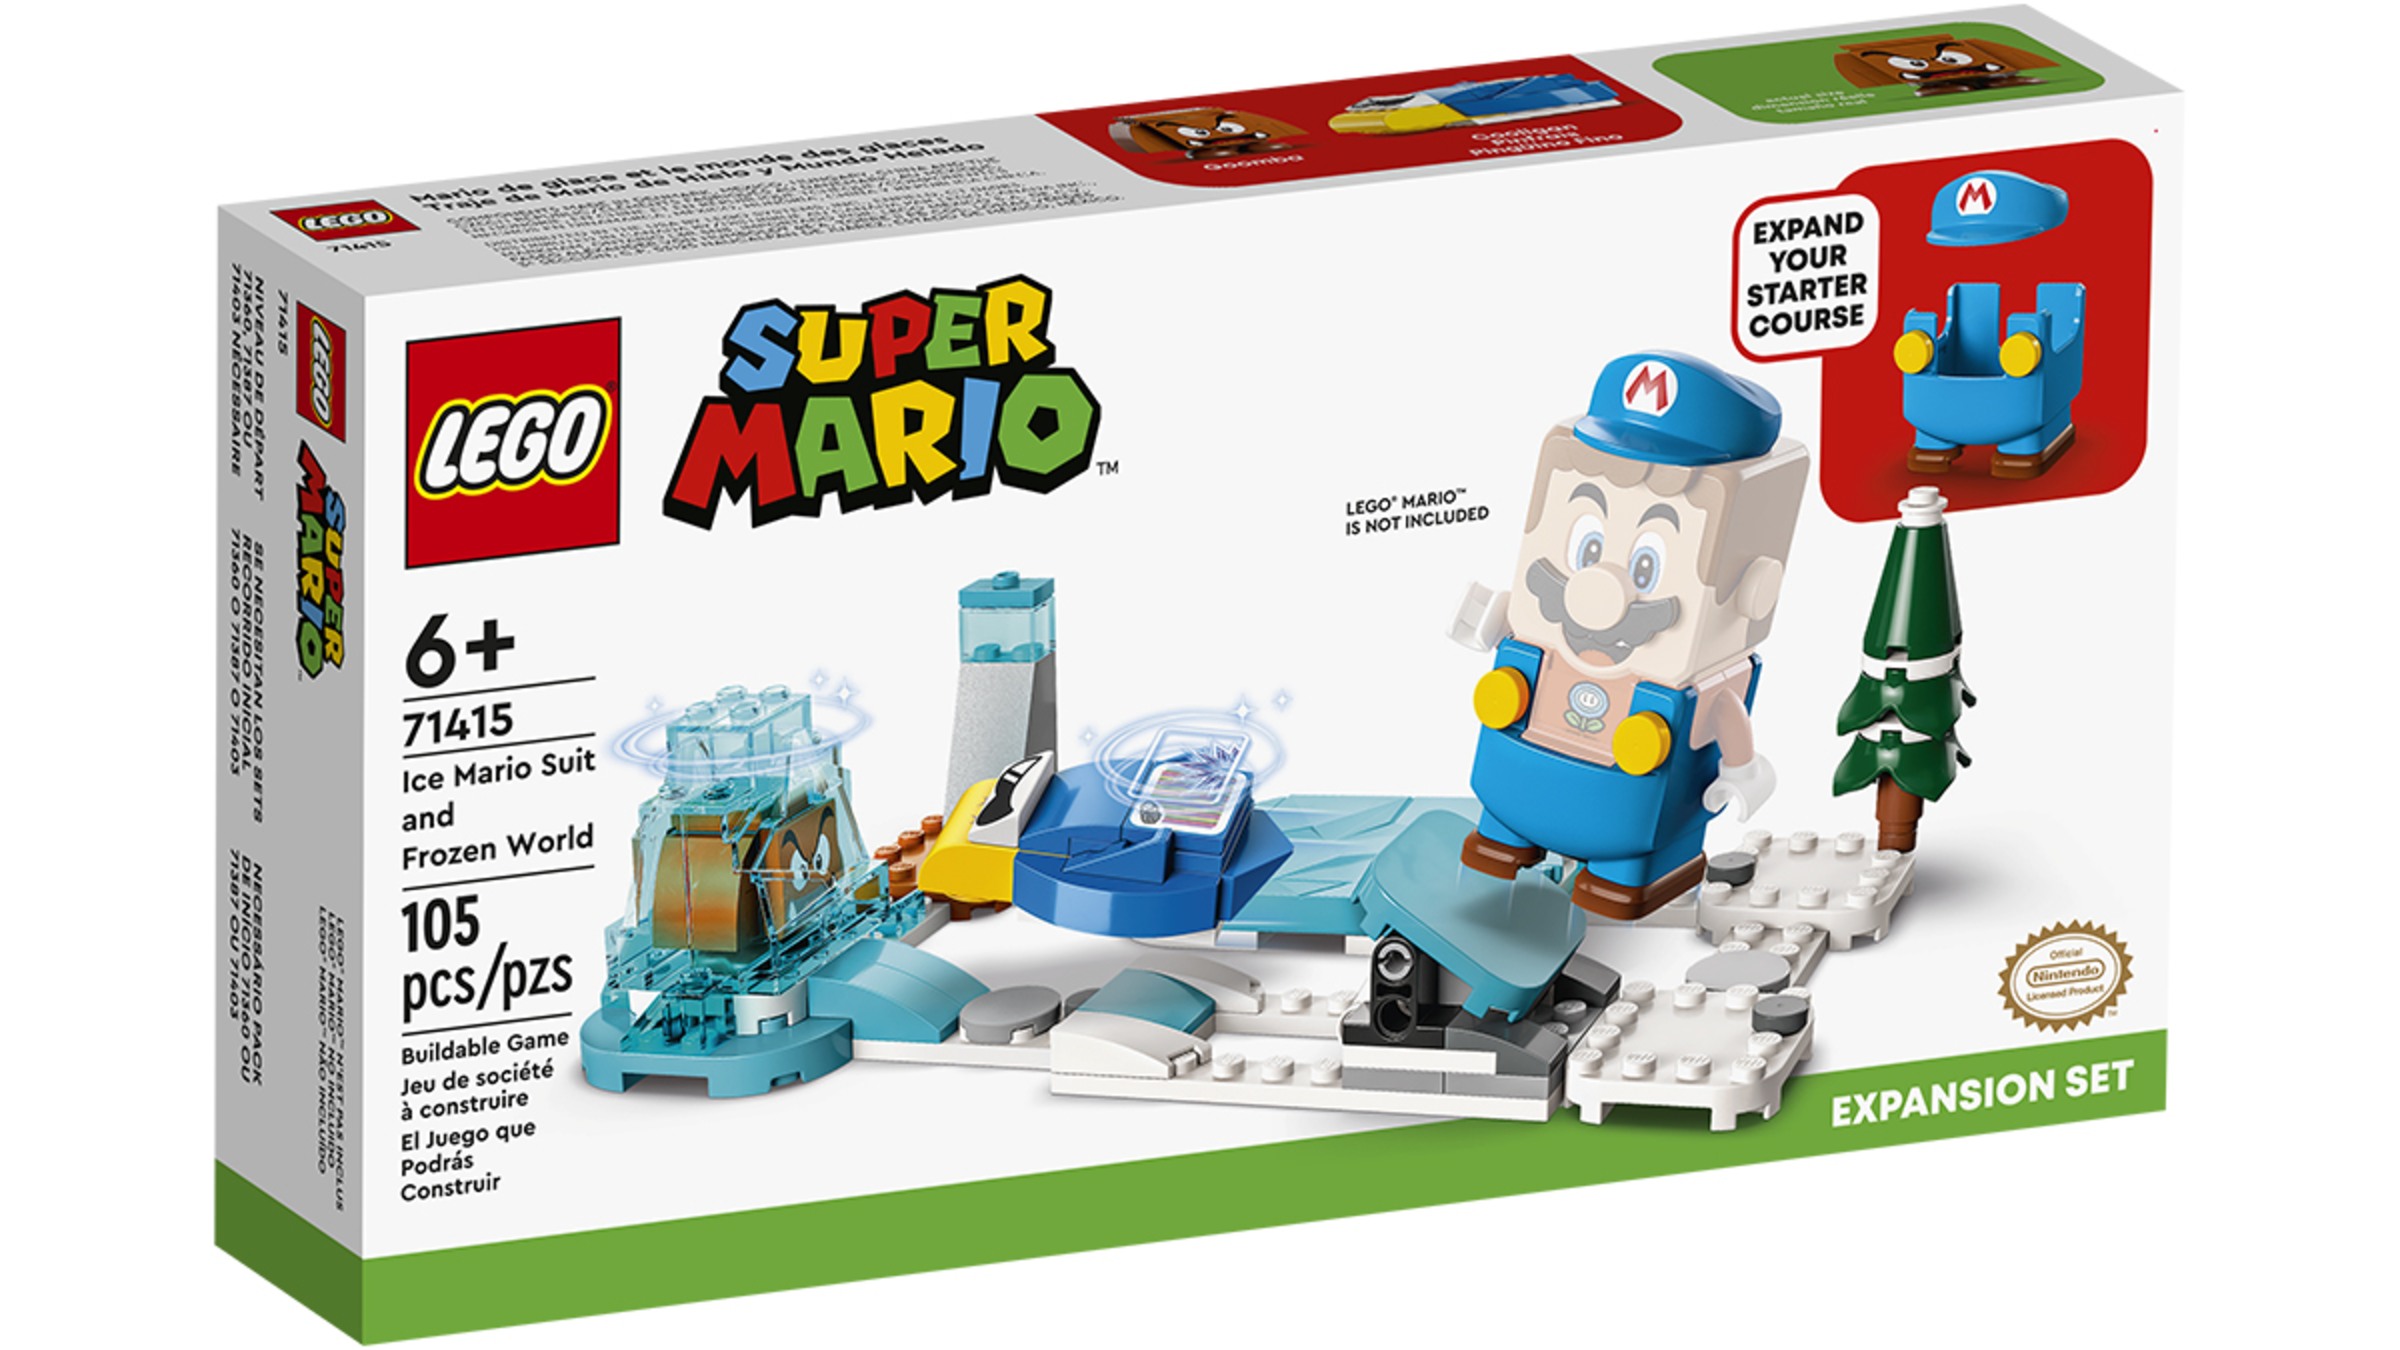 LEGO® Super Mario™ Ice Mario Suit and Frozen World Expansion Set